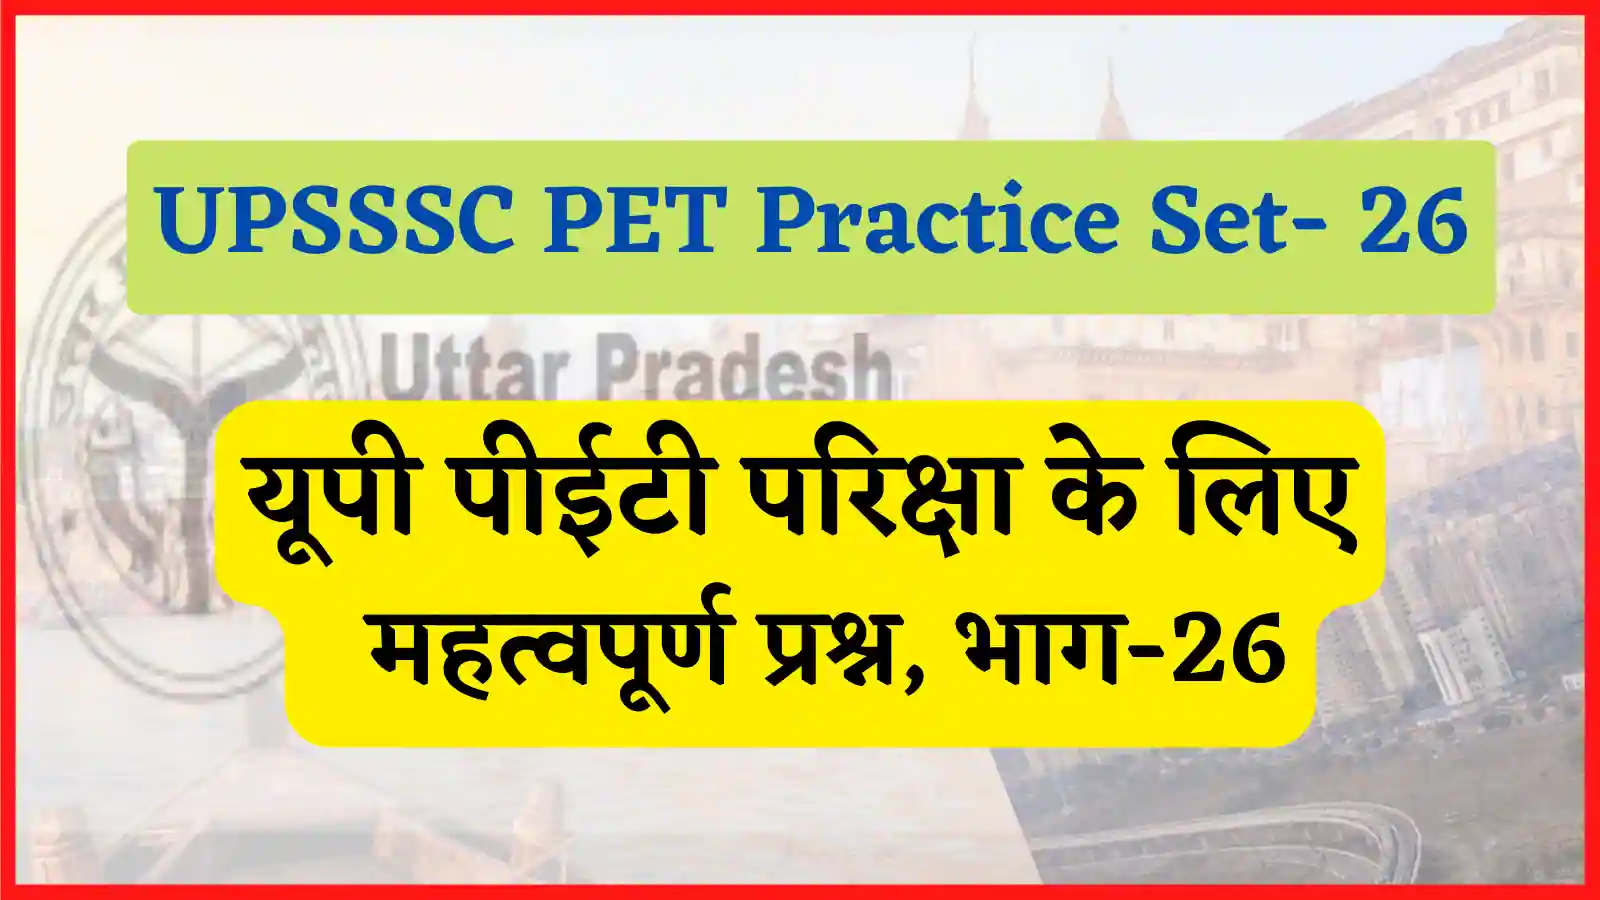 UPSSSC PET Practice Set-26 